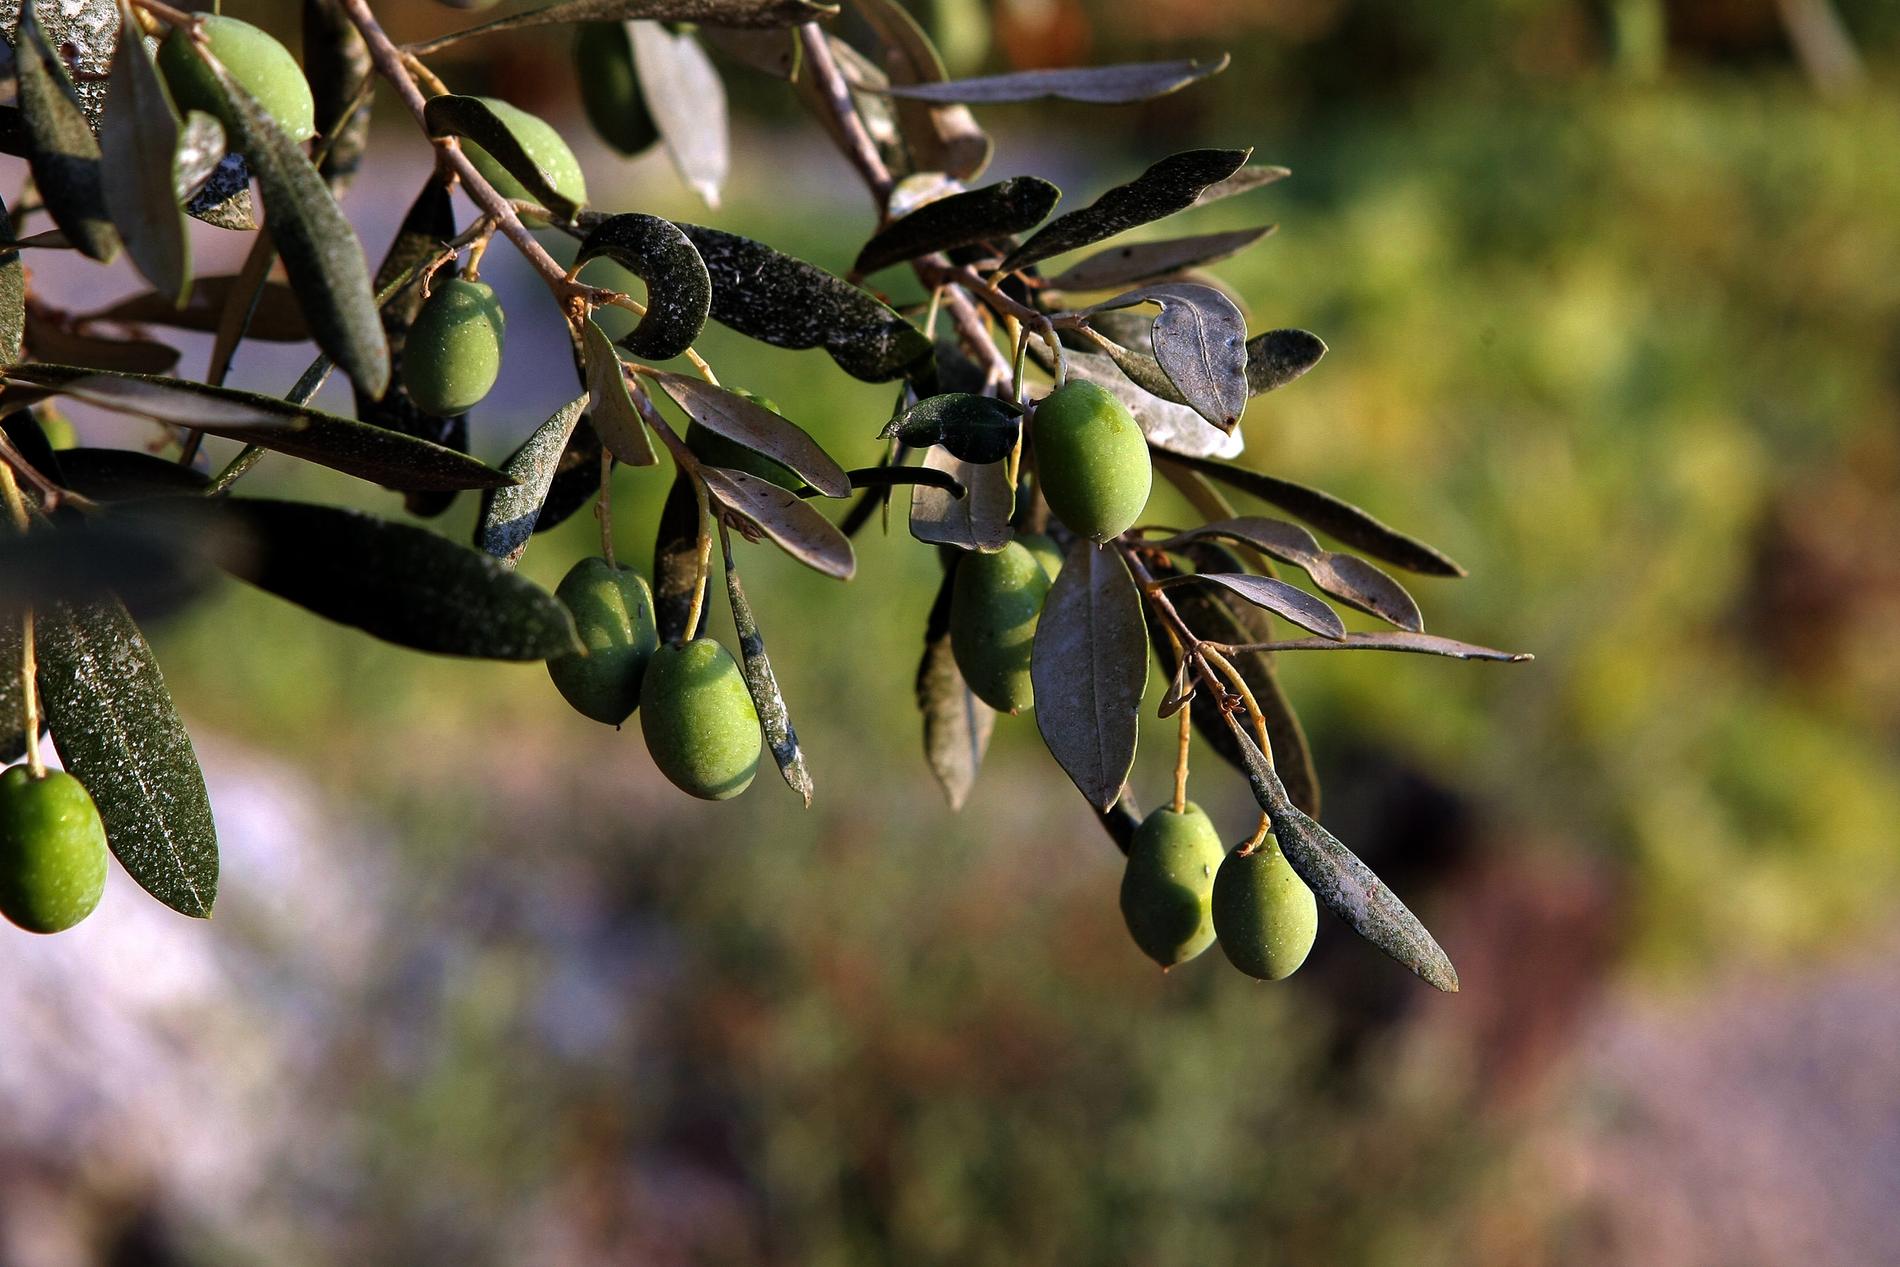 Tjuvarna stal 17,5 ton oliver från lokala gårdar i Spanien.